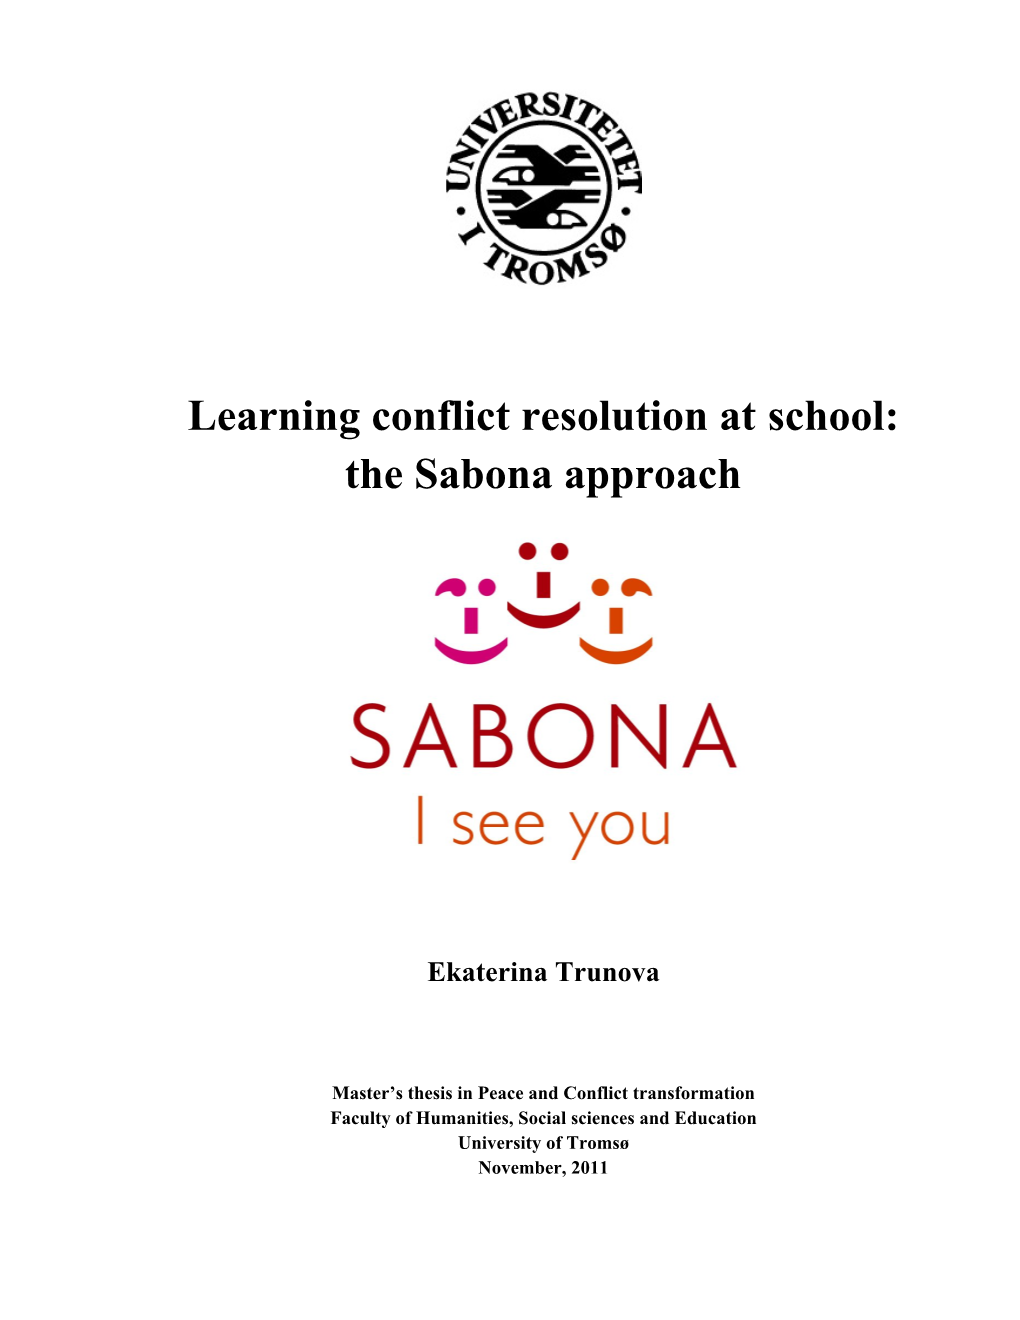 Sabona Approach